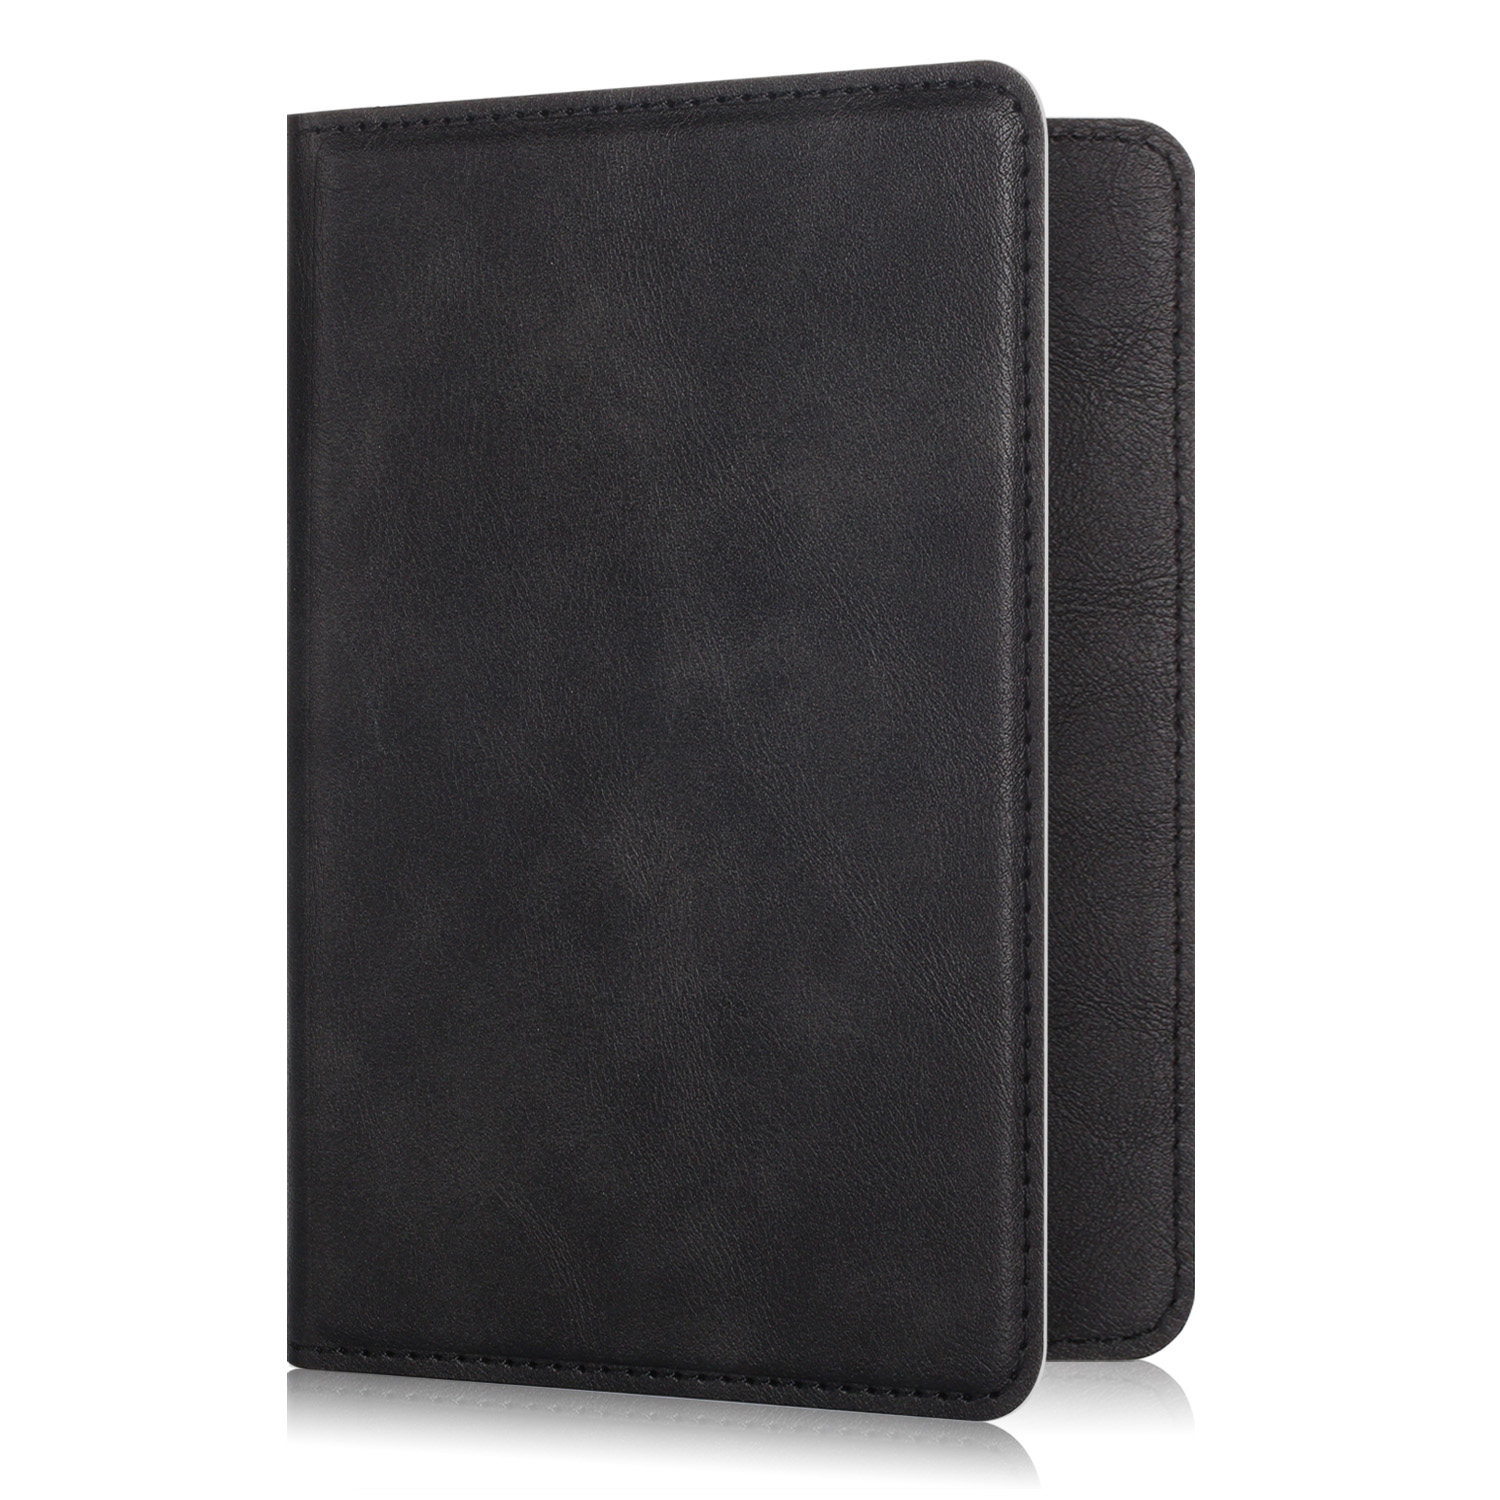 Printing-Passport-Tablet-Case---Black-1591513-1